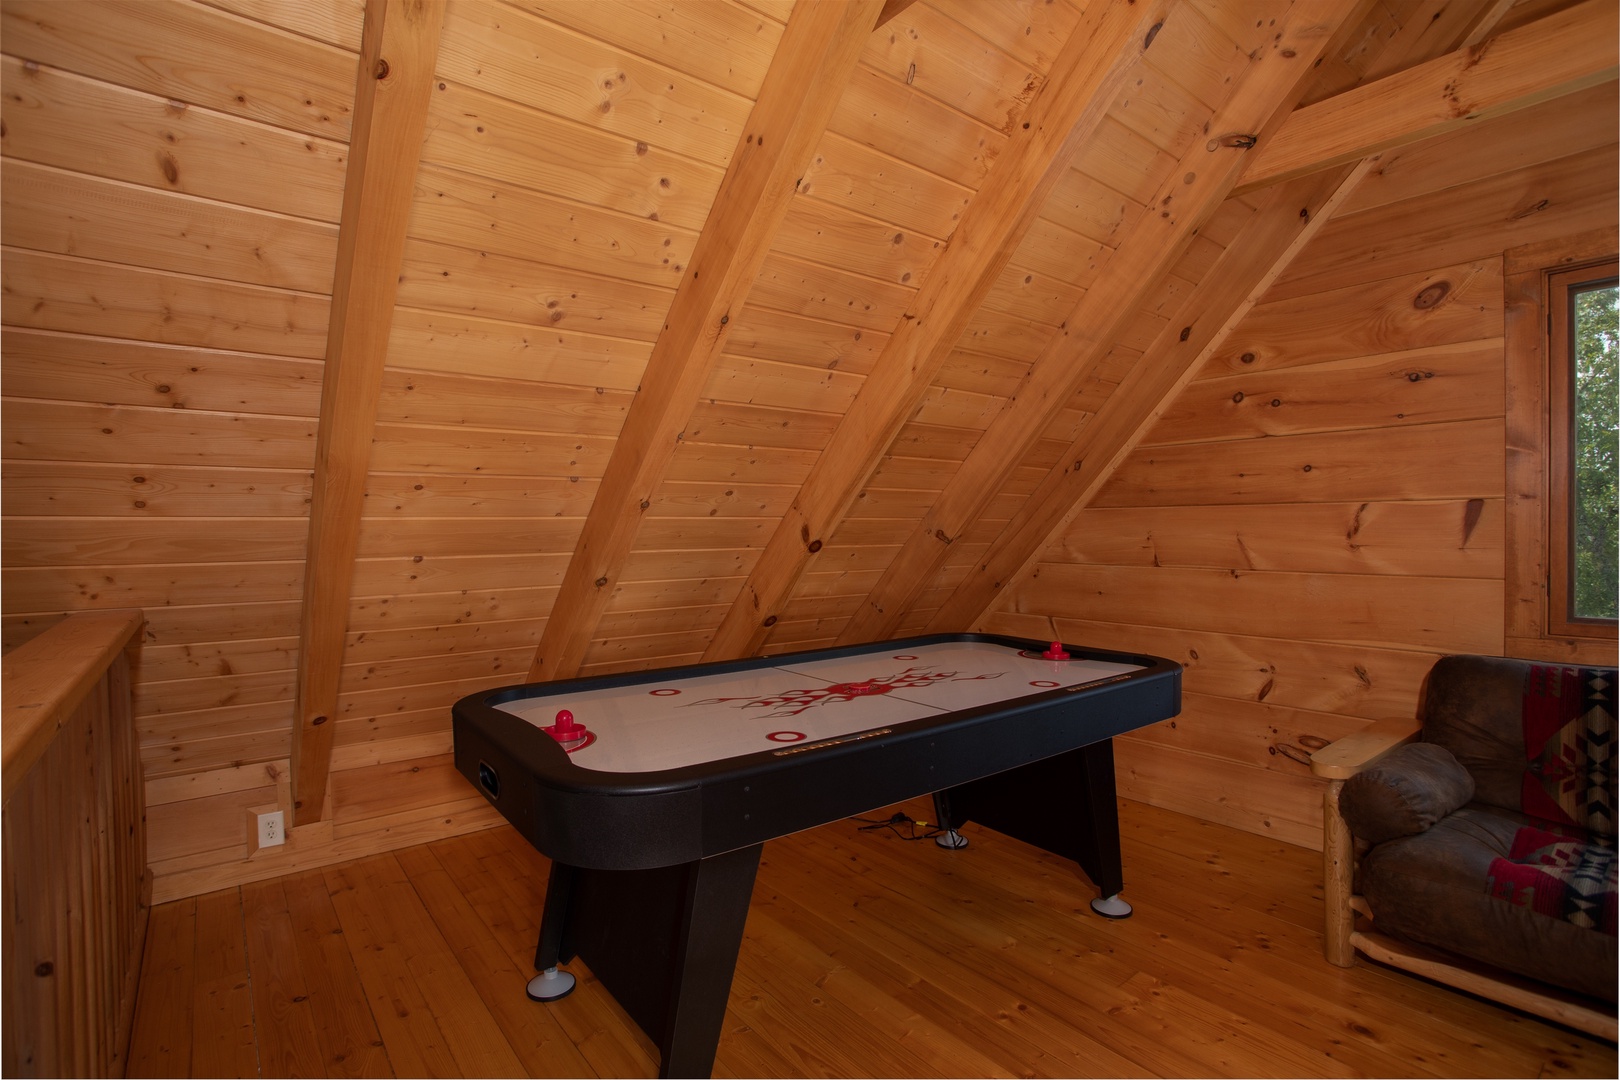 Air hockey table in the game loft at Cedar Creeks, a 2-bedroom cabin rental located near Douglas Lake